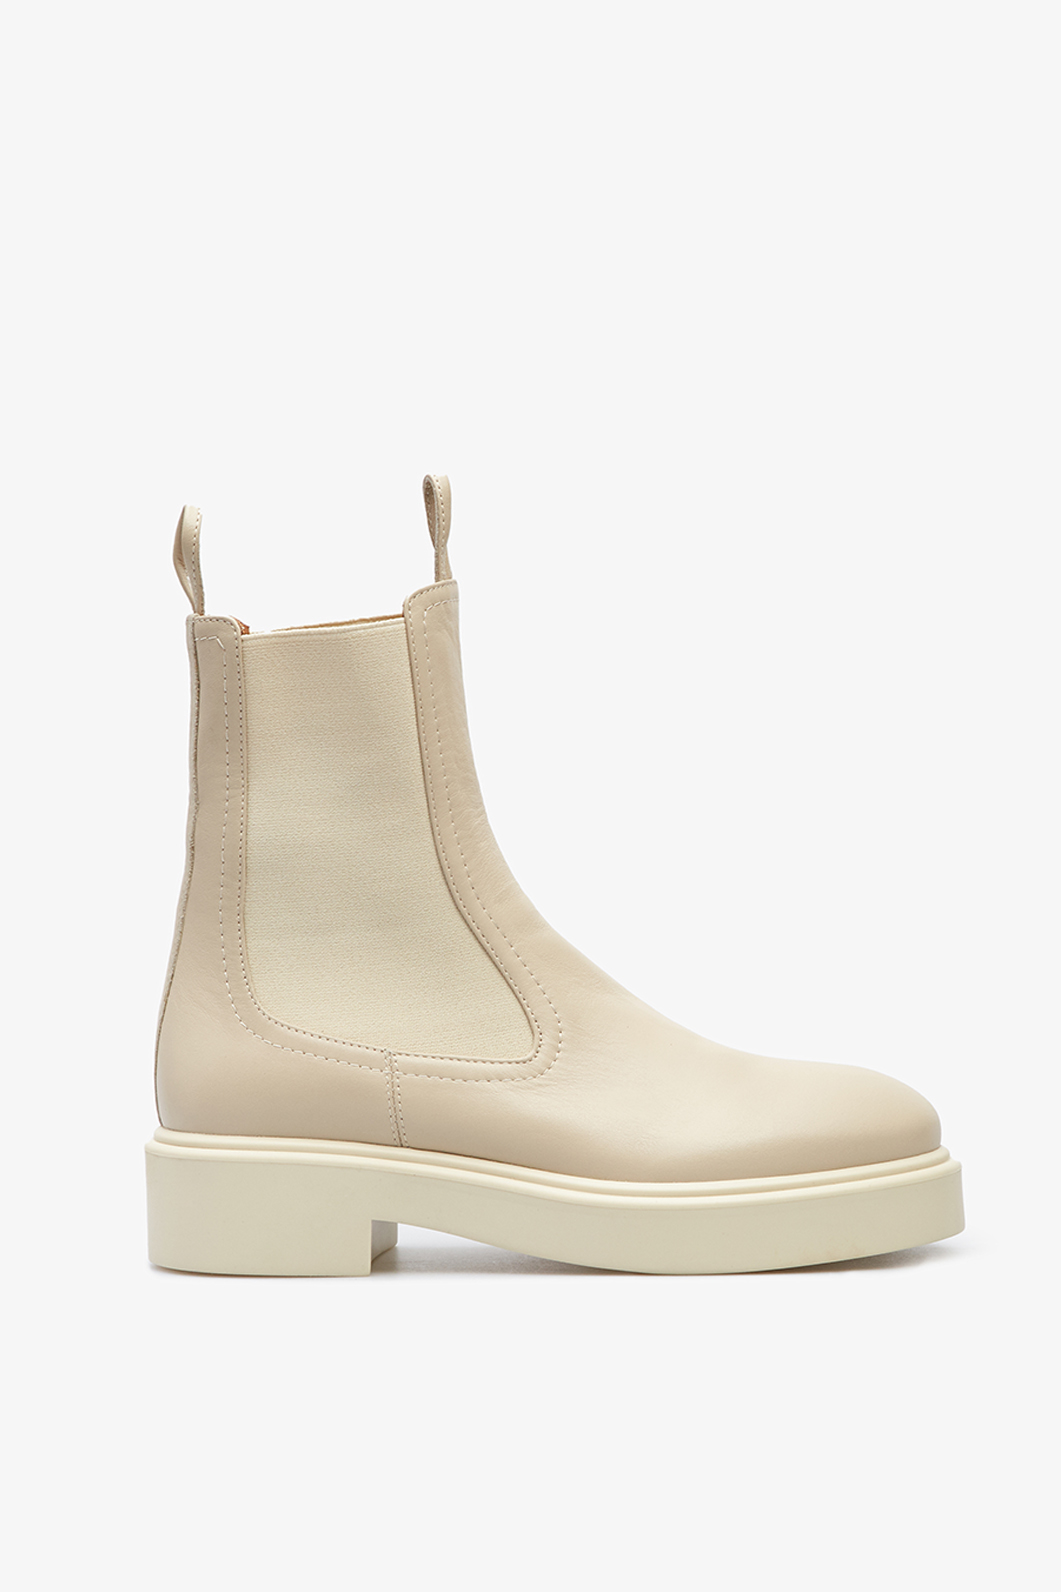 Taya beige leather
chelsea boots /baize/